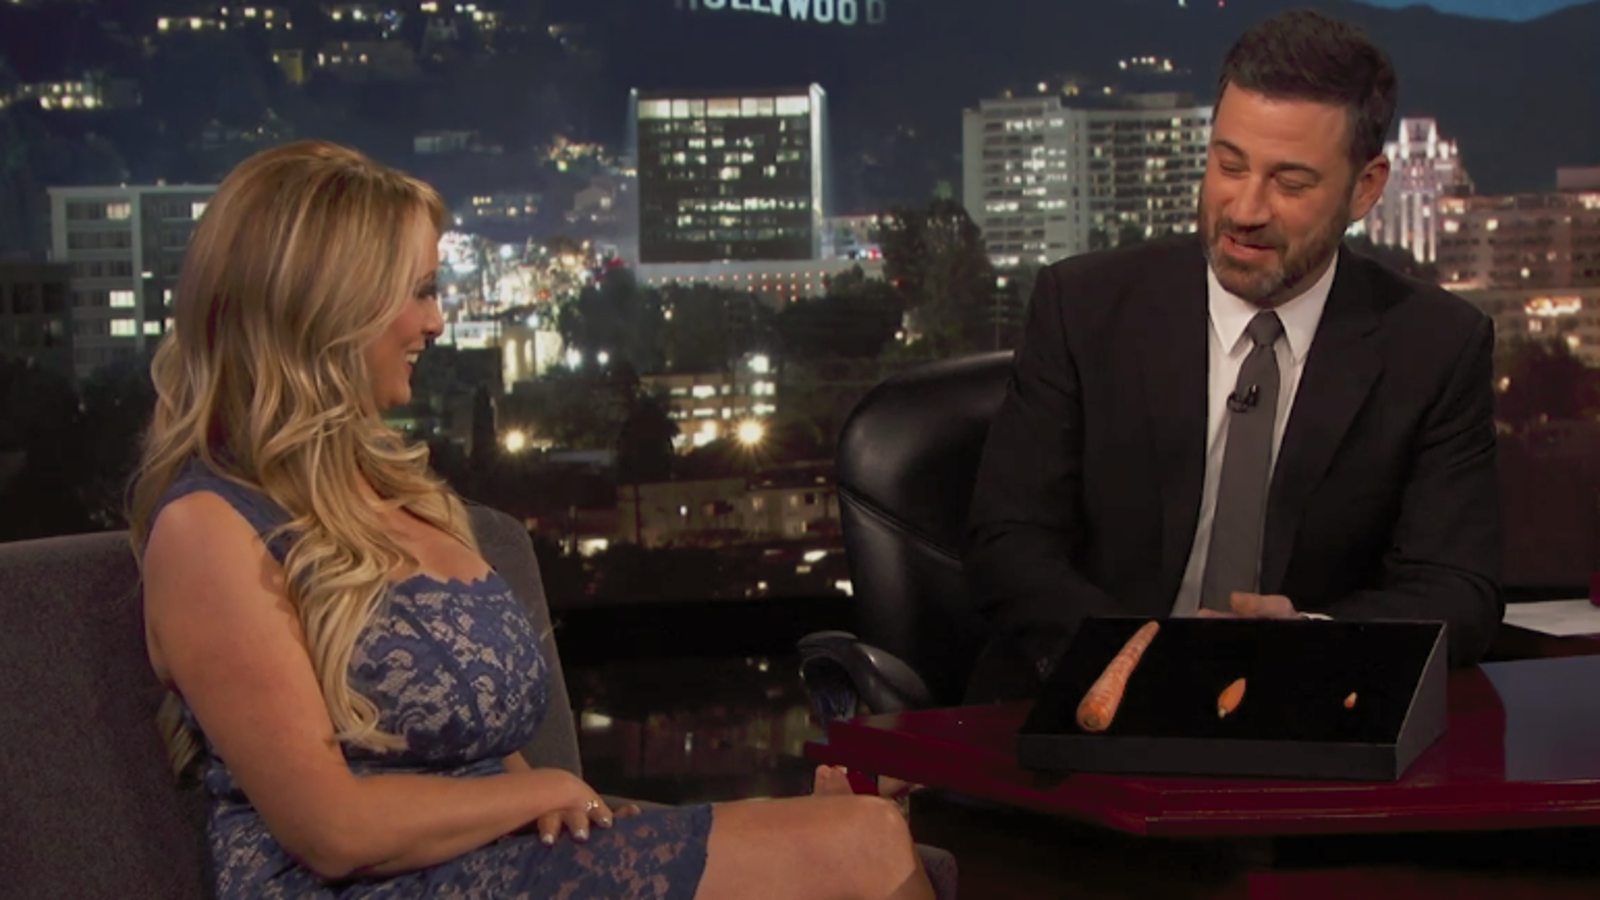 Jimmy Kimmel turns Stormy Daniels’ Live! appearance into a pretty gross